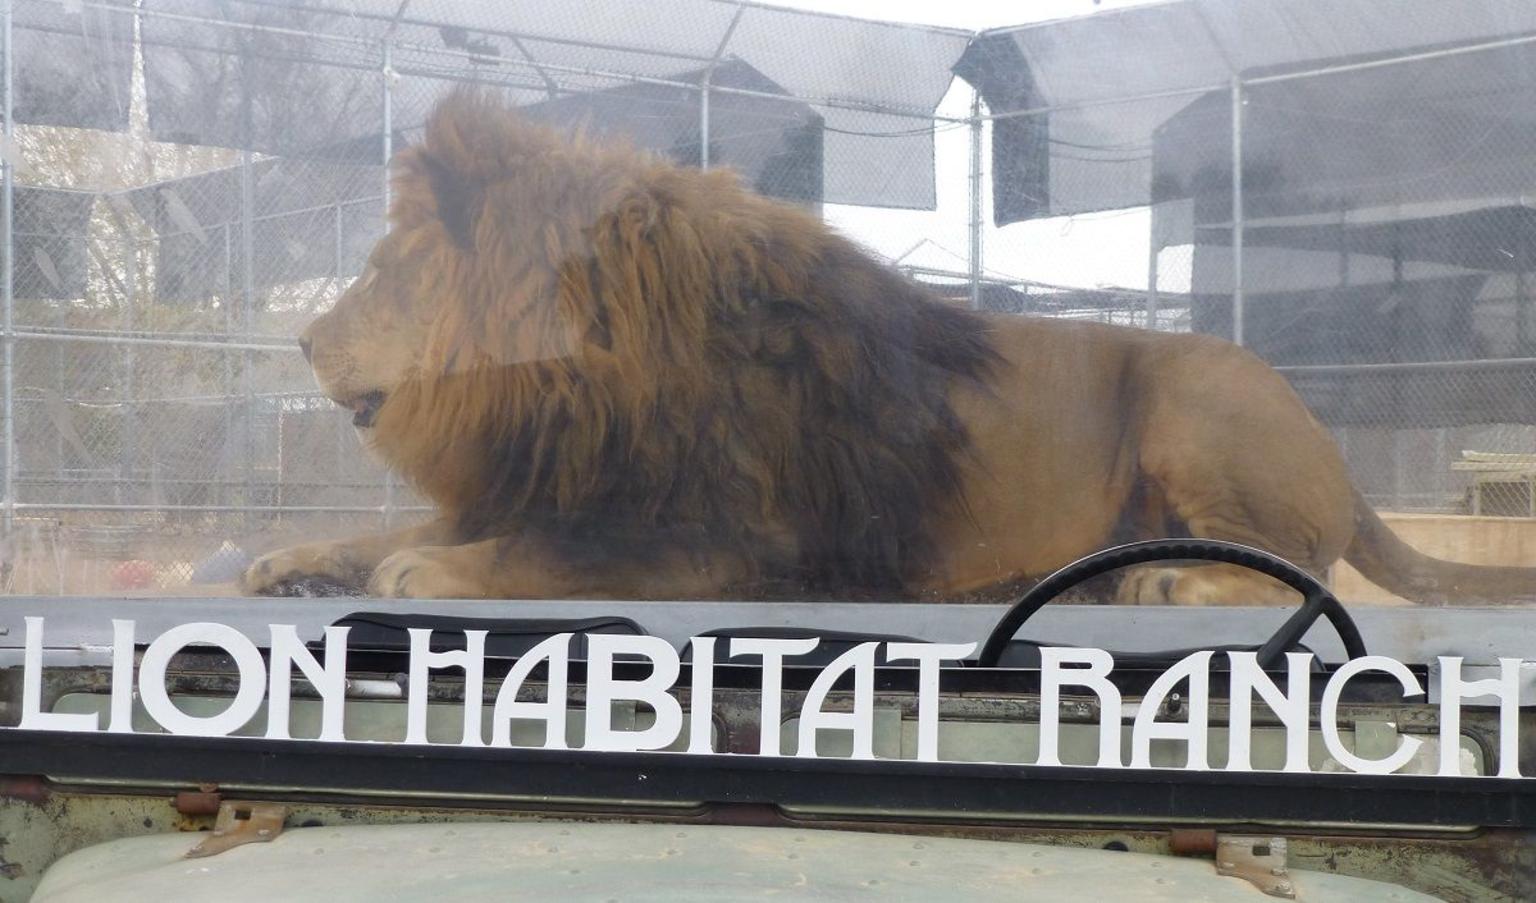 Lion Habitat